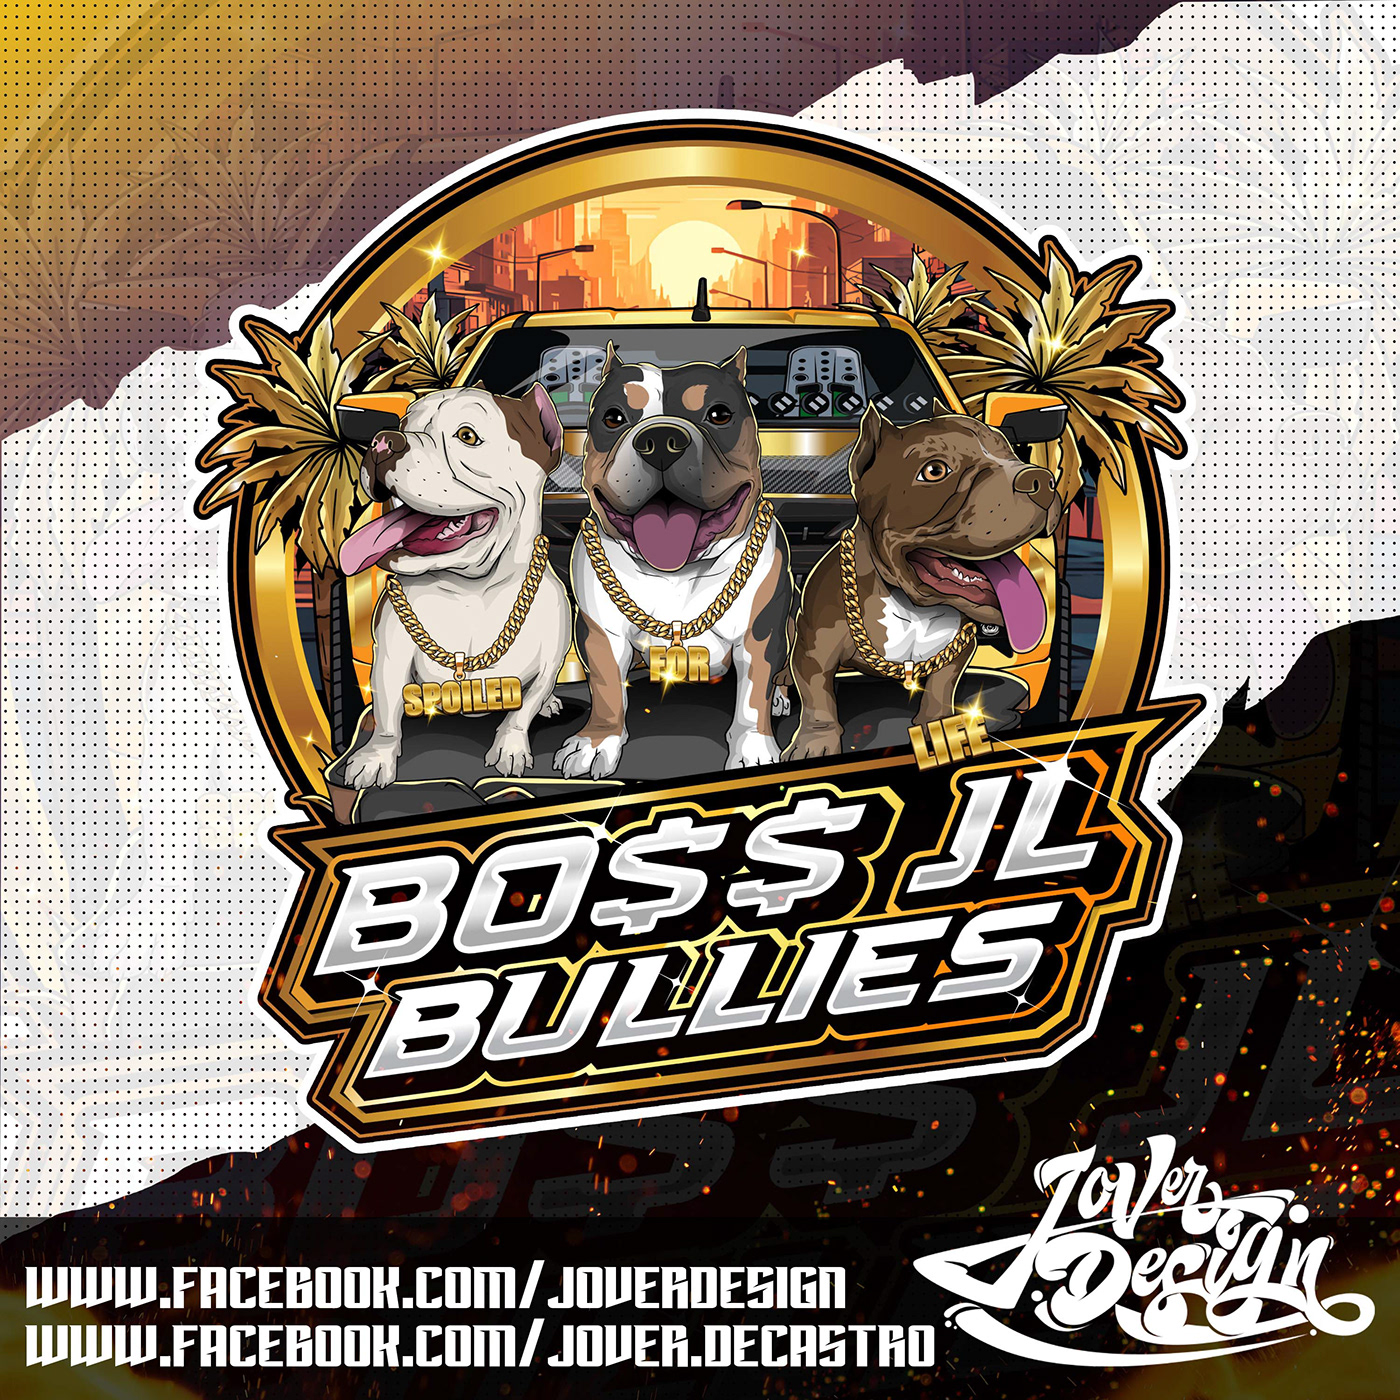 kennel logo bullies american bullies French Bulldog American Bully Logo bullies logo bully logo english bulldog